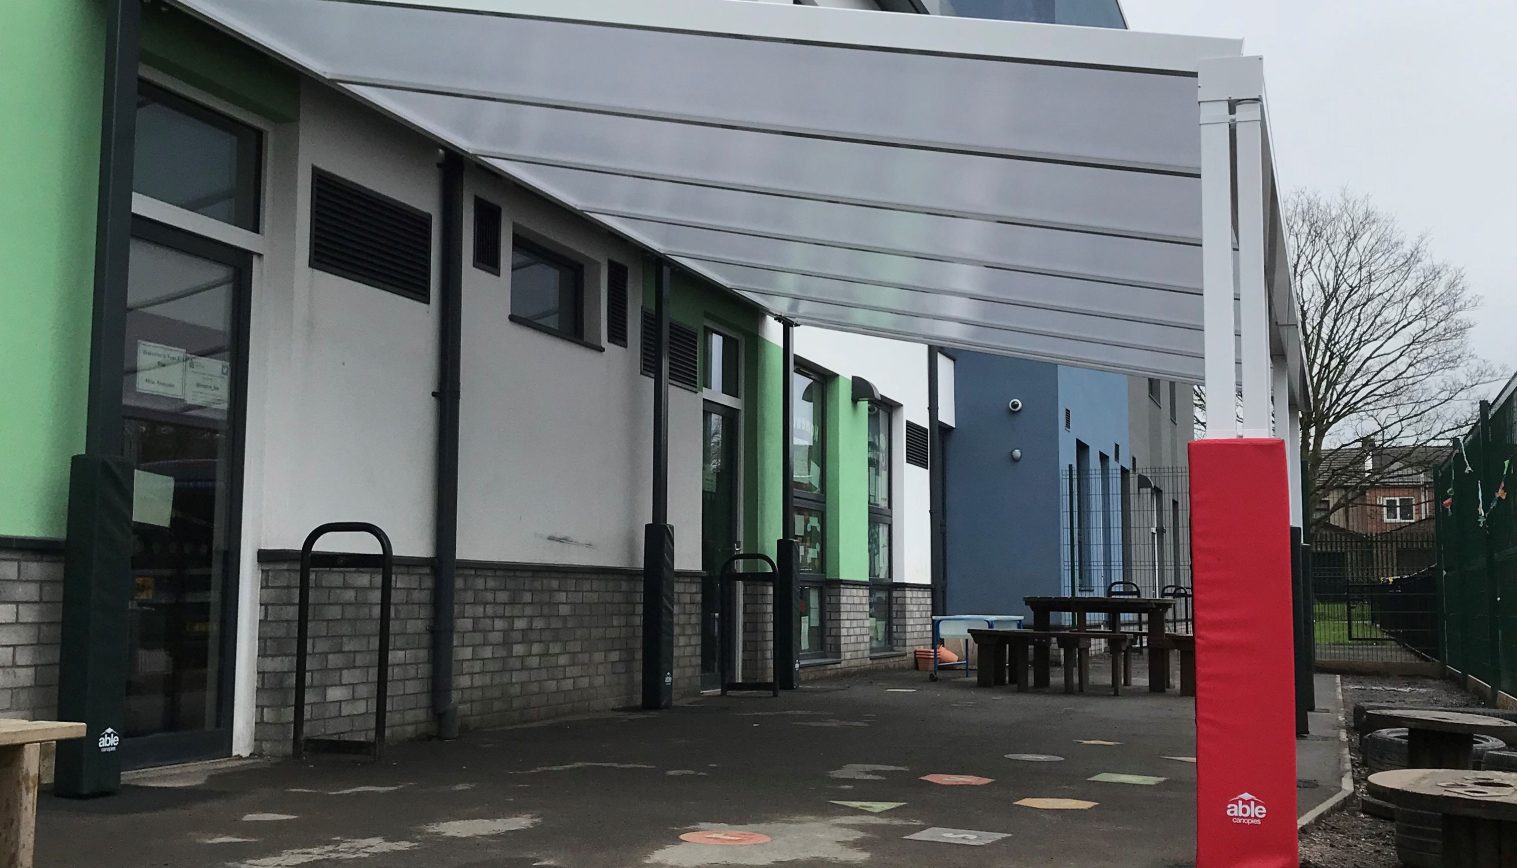 Mesne Lea Primary School Second Install